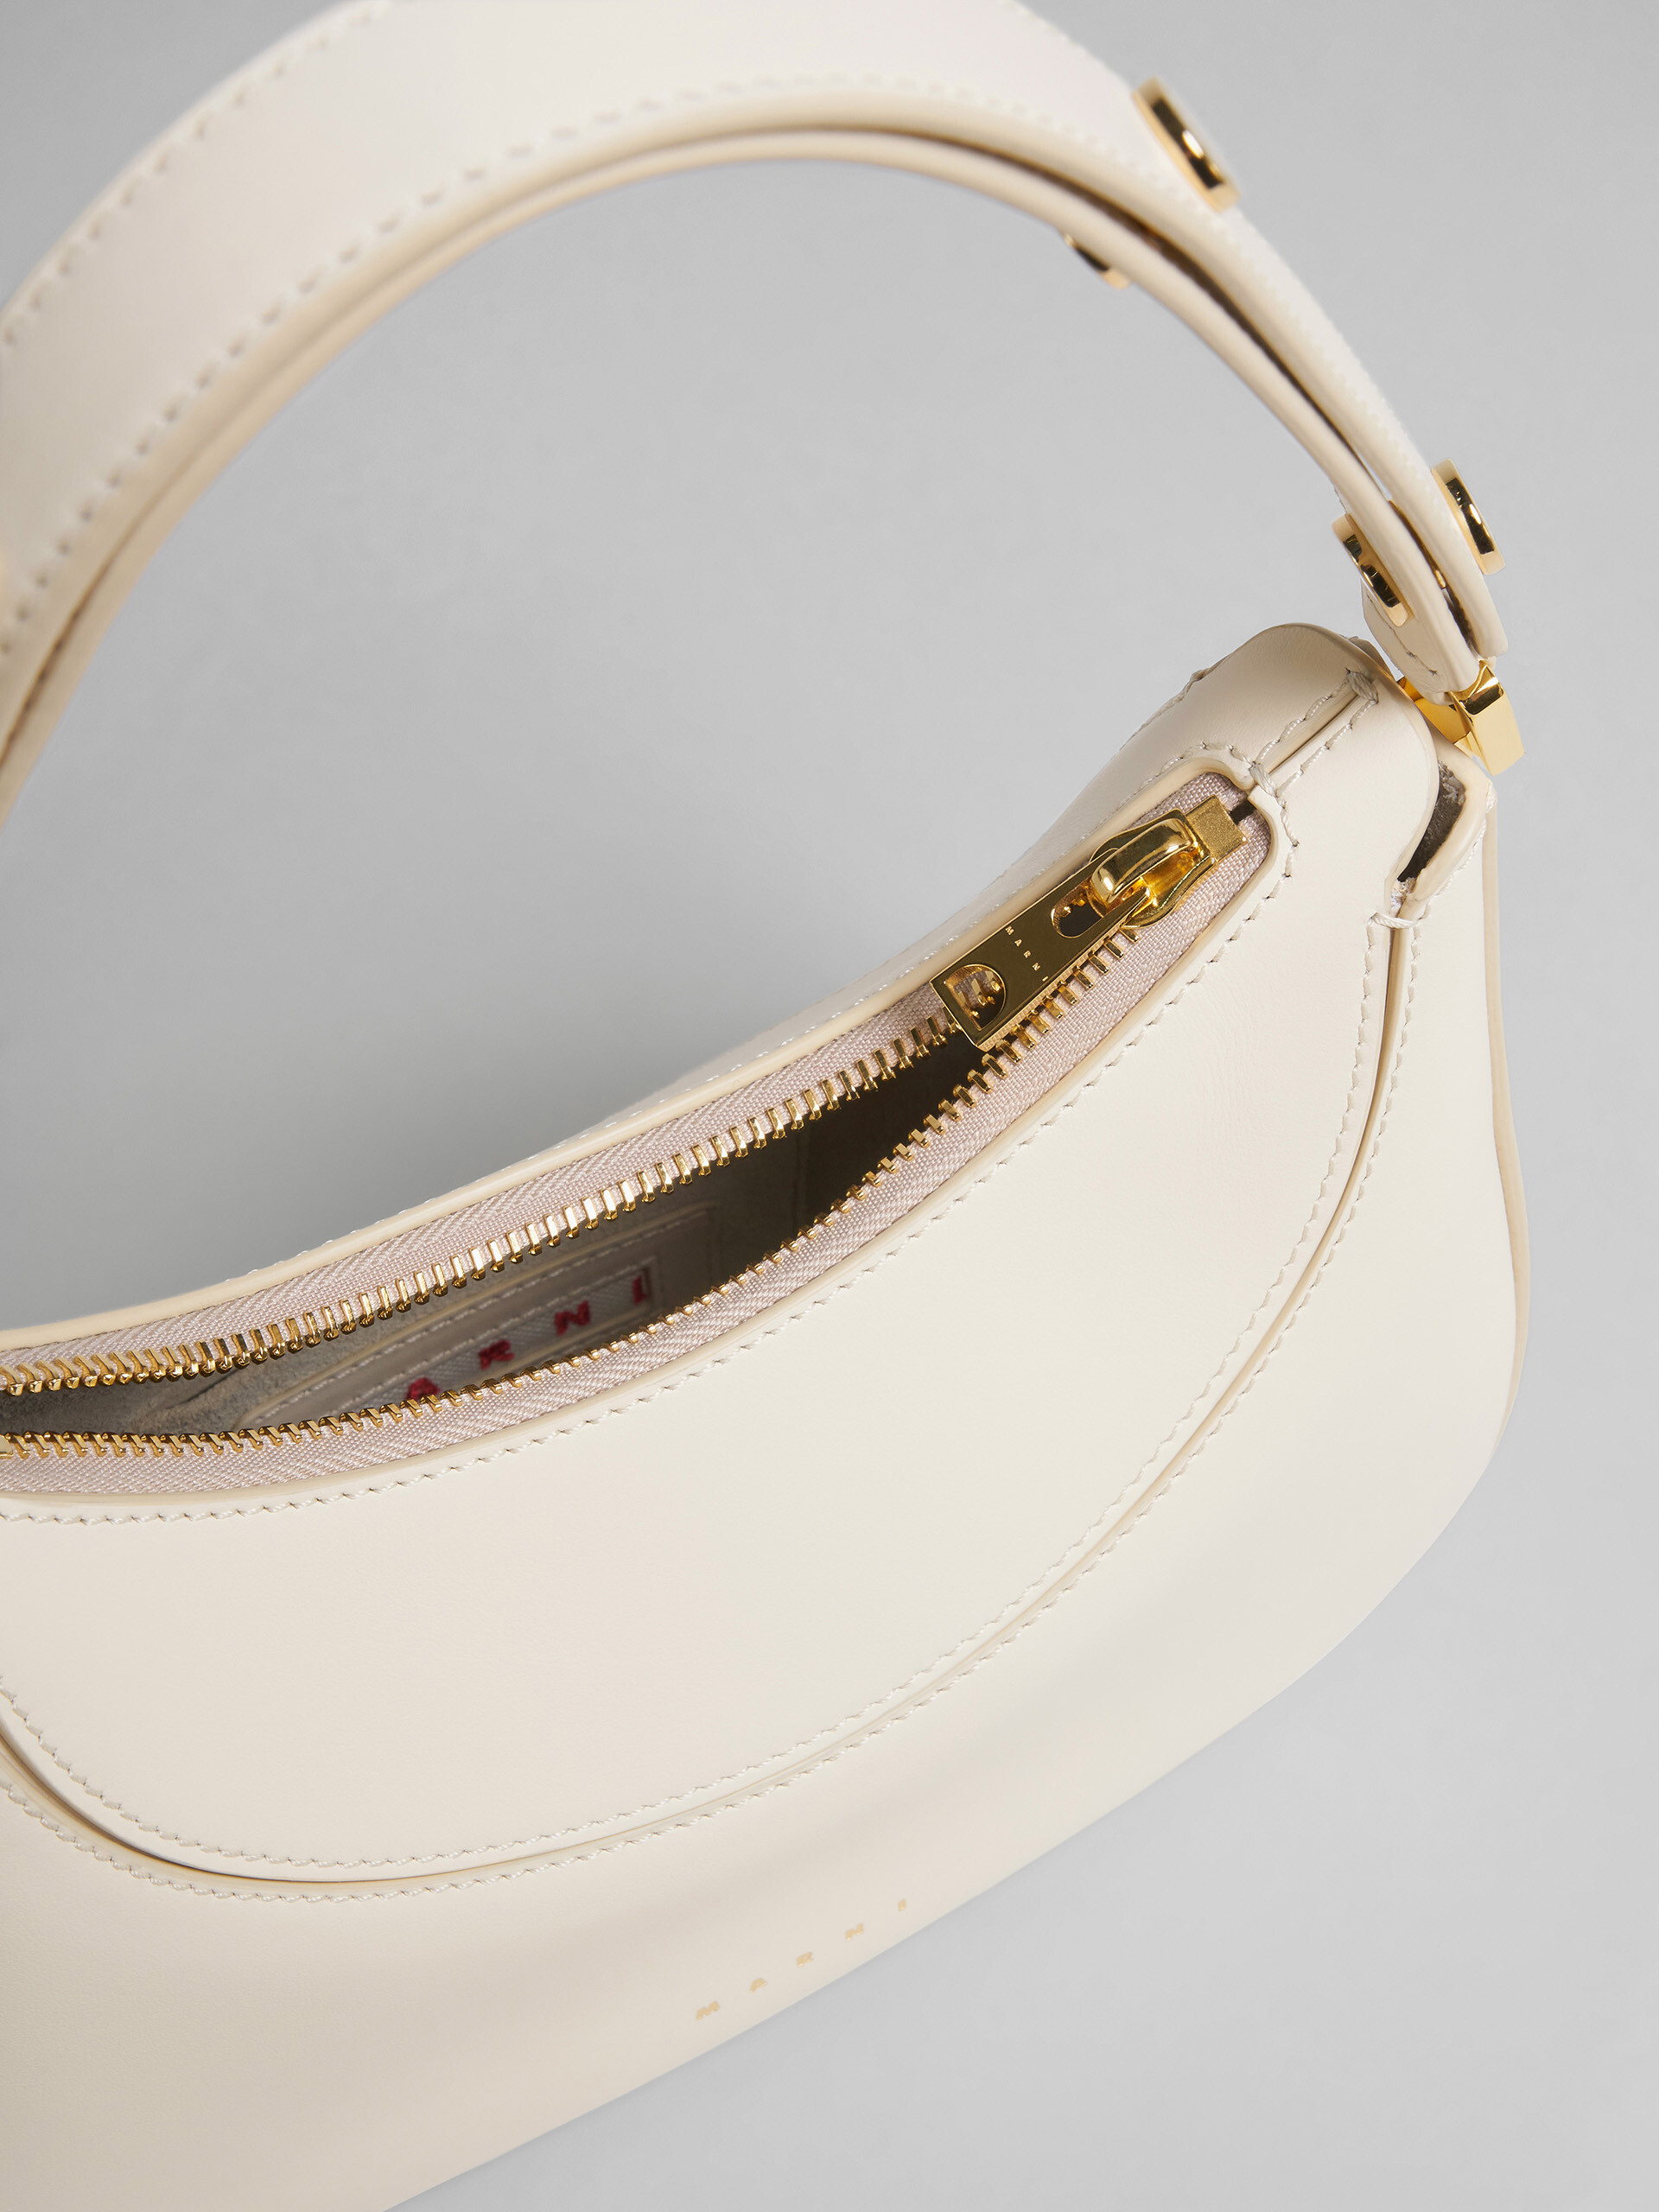 Milano mini bag in white leather - Handbags - Image 4